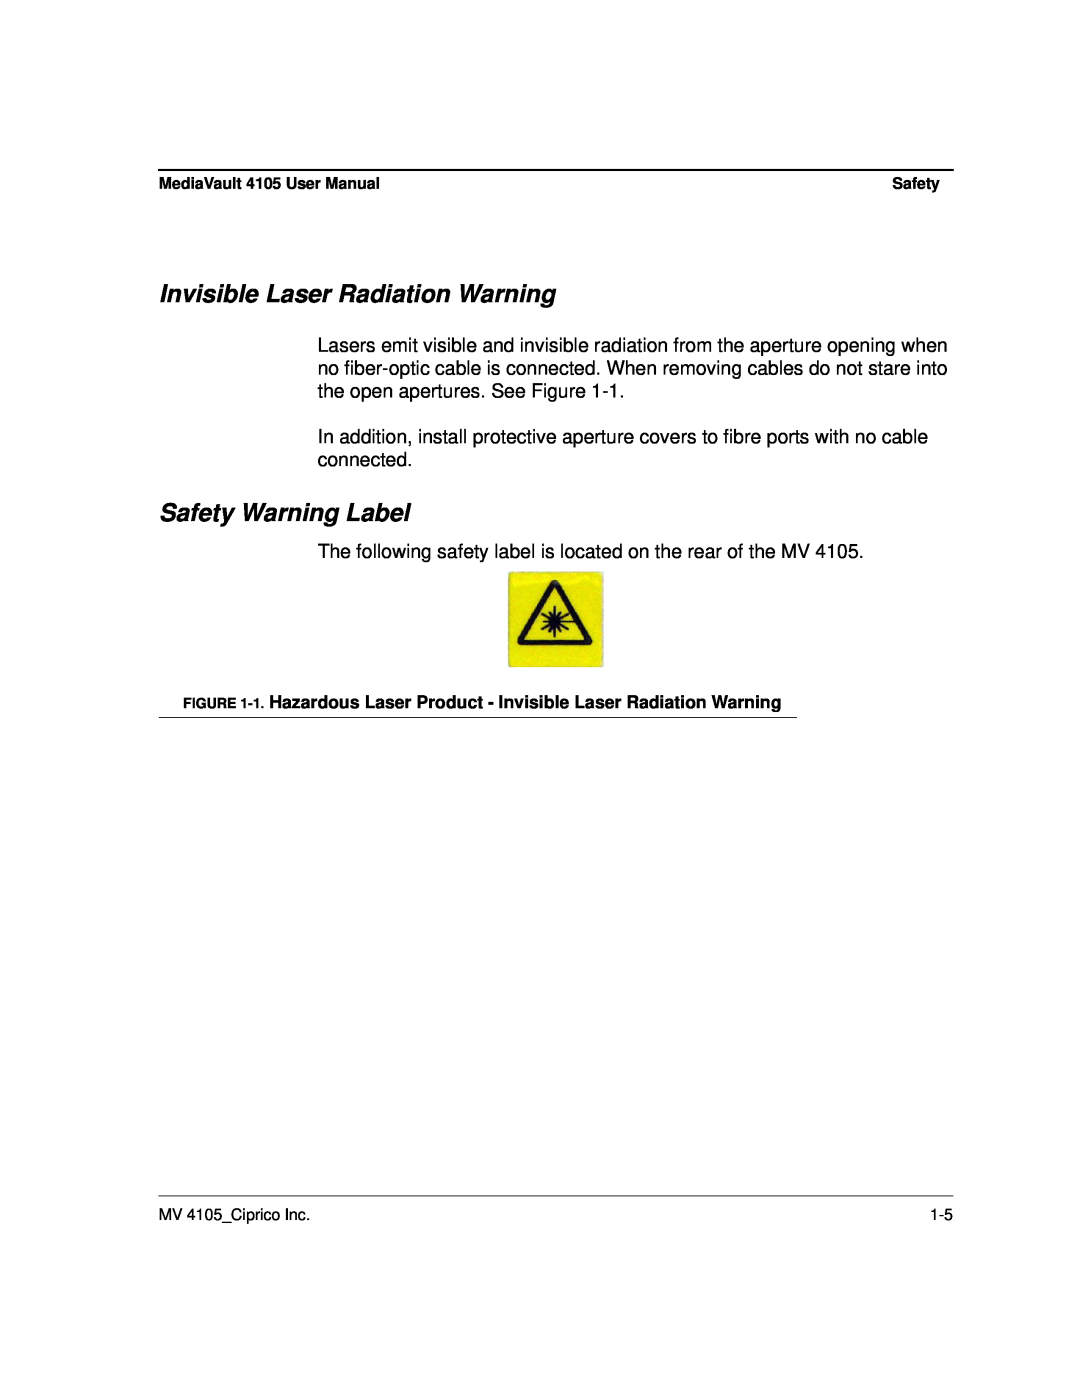 Ciprico 4105 Series user manual Invisible Laser Radiation Warning, Safety Warning Label 